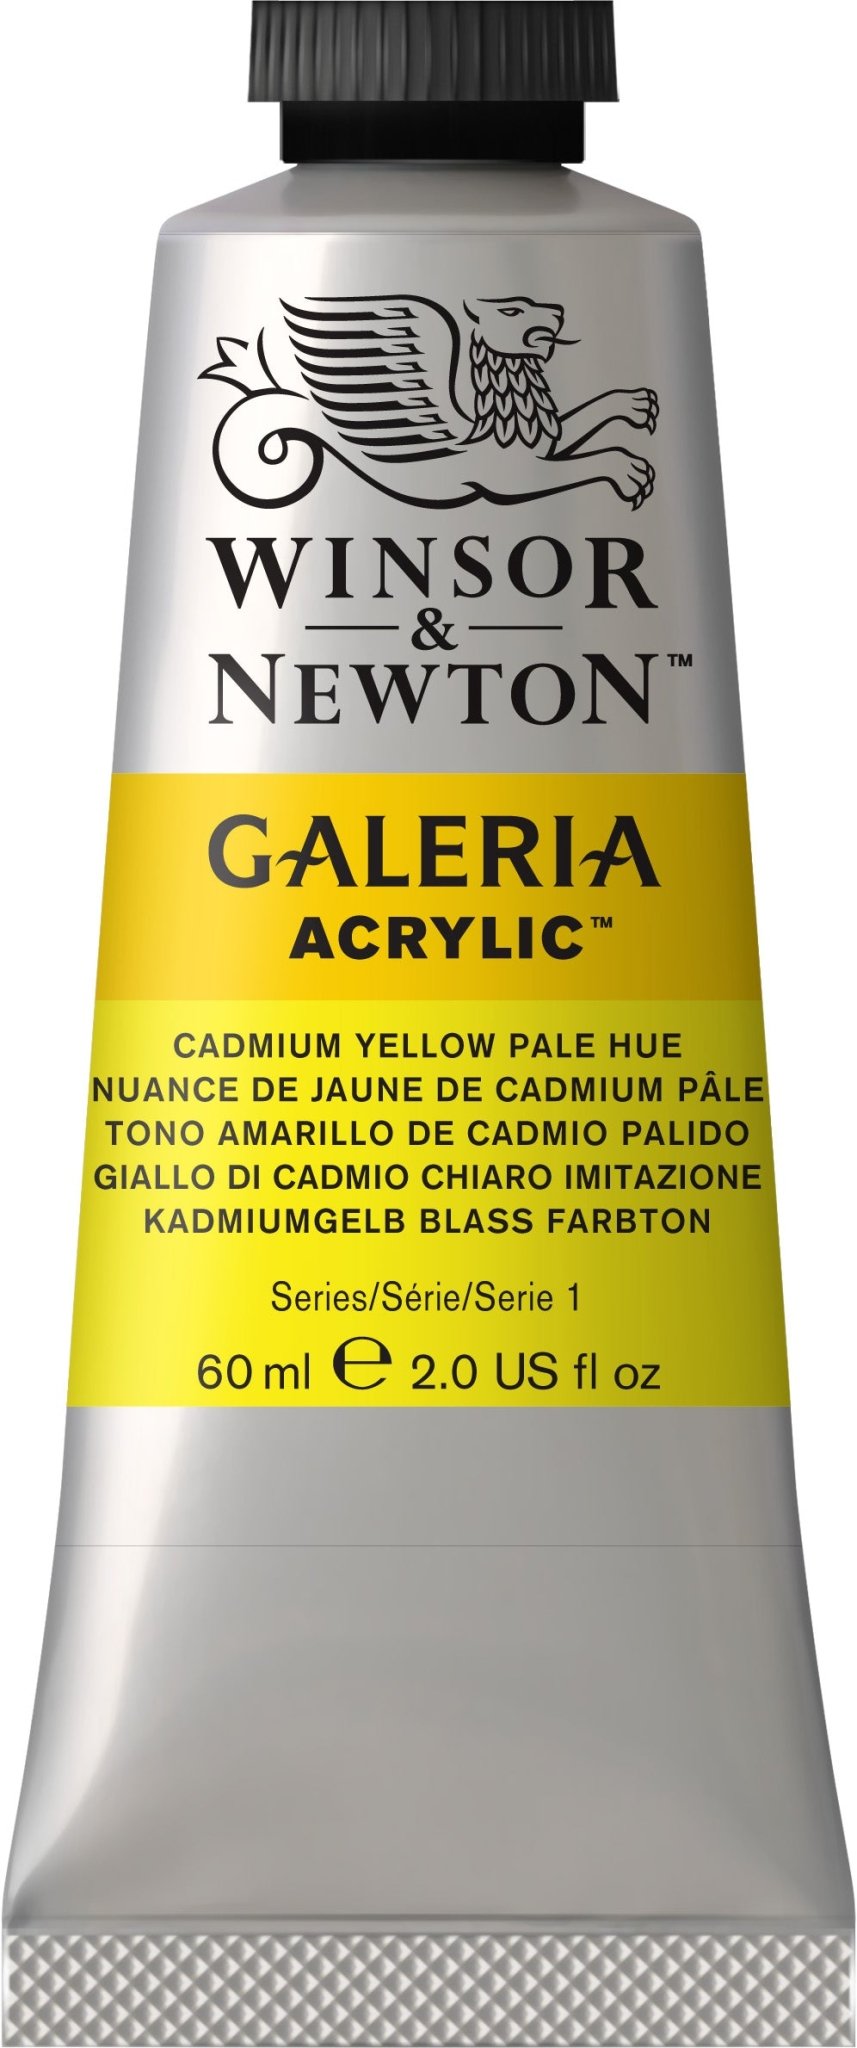 W & N Galeria Acrylic 60ml Cadmium Yellow Pale Hue - theartshop.com.au